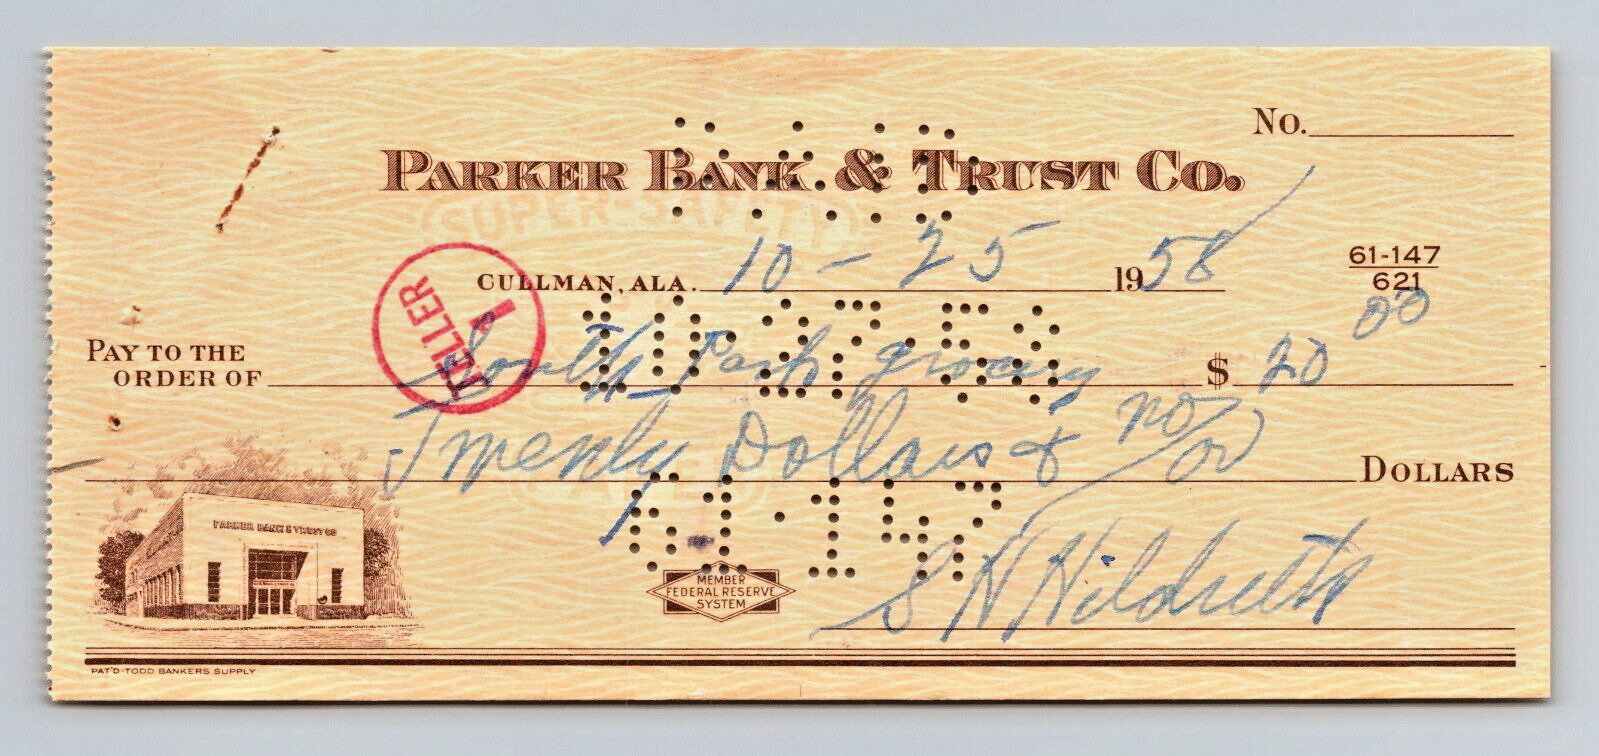 Vintage 1958 cancelled check PARKER BANK & TRUST CO. Cullman, Alabama